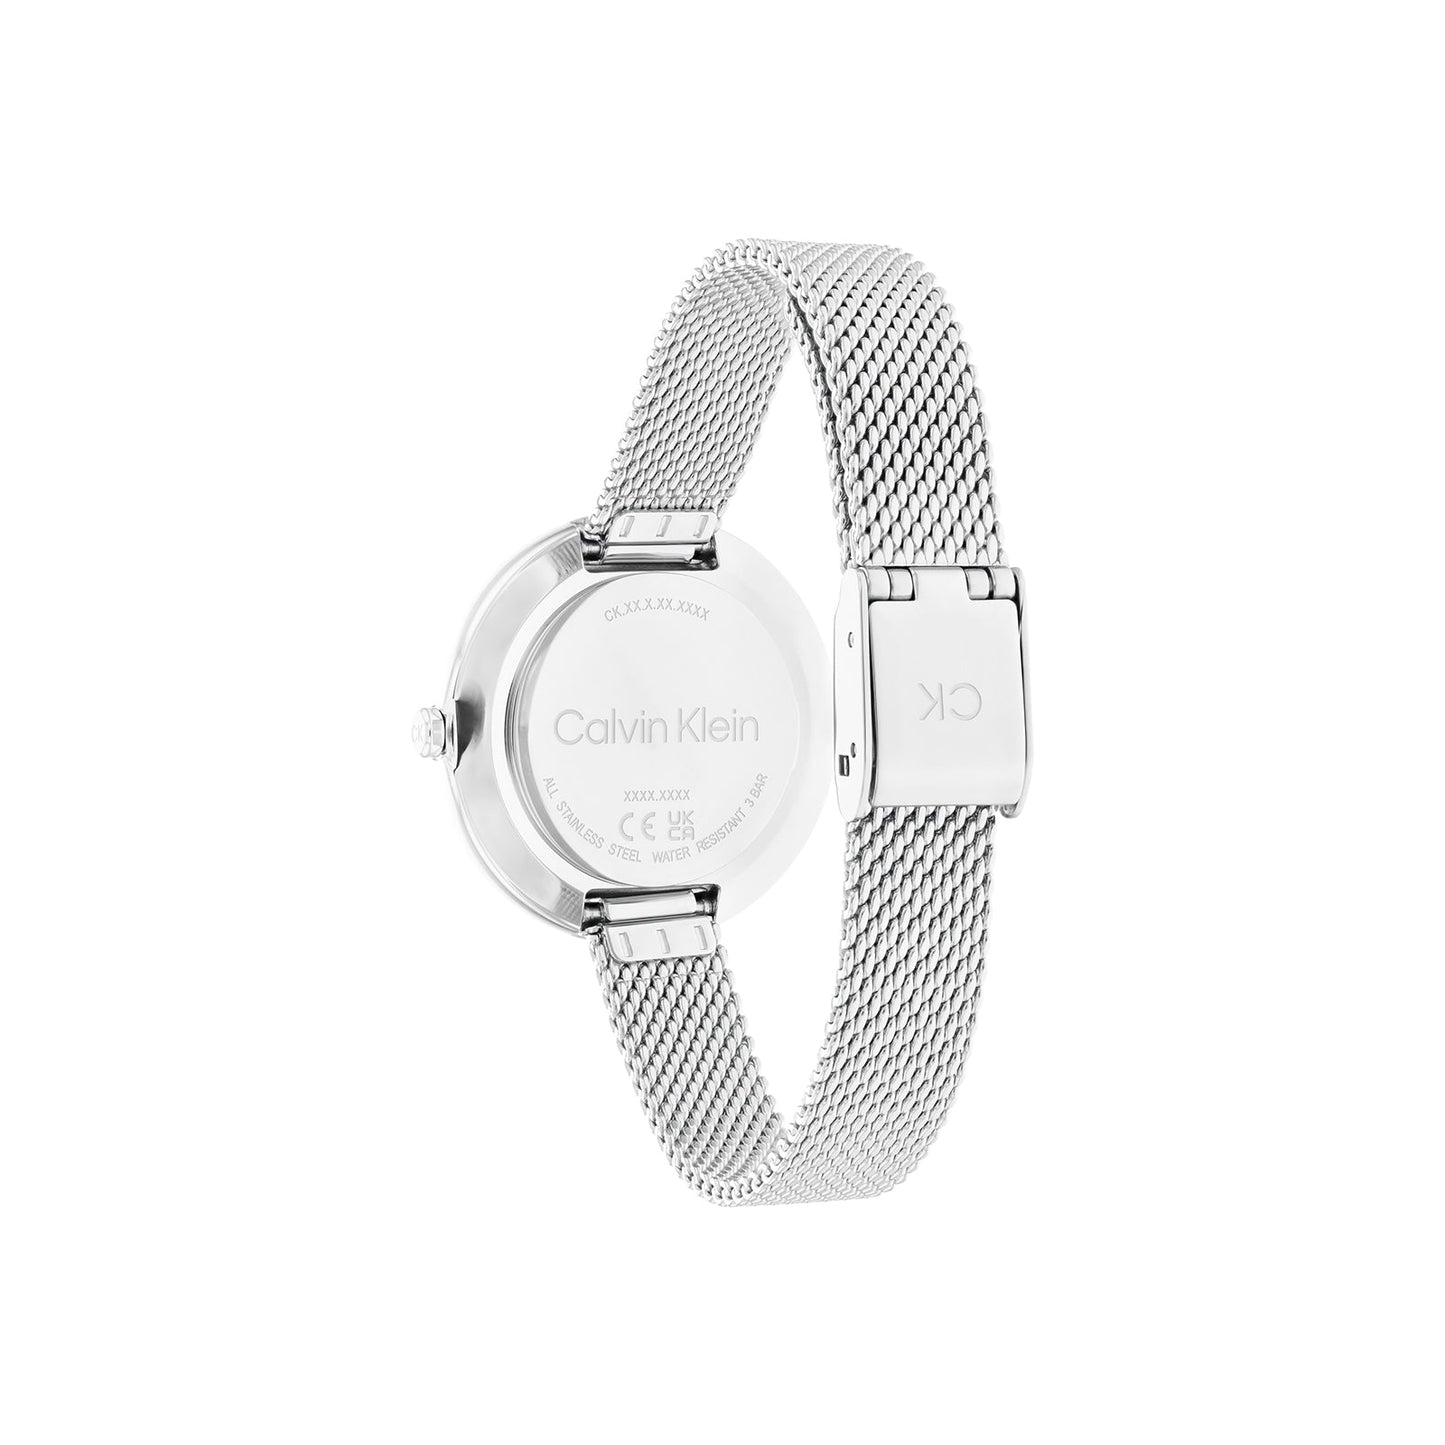 Calvin Klein 25200184 Women's Steel Mesh Watch